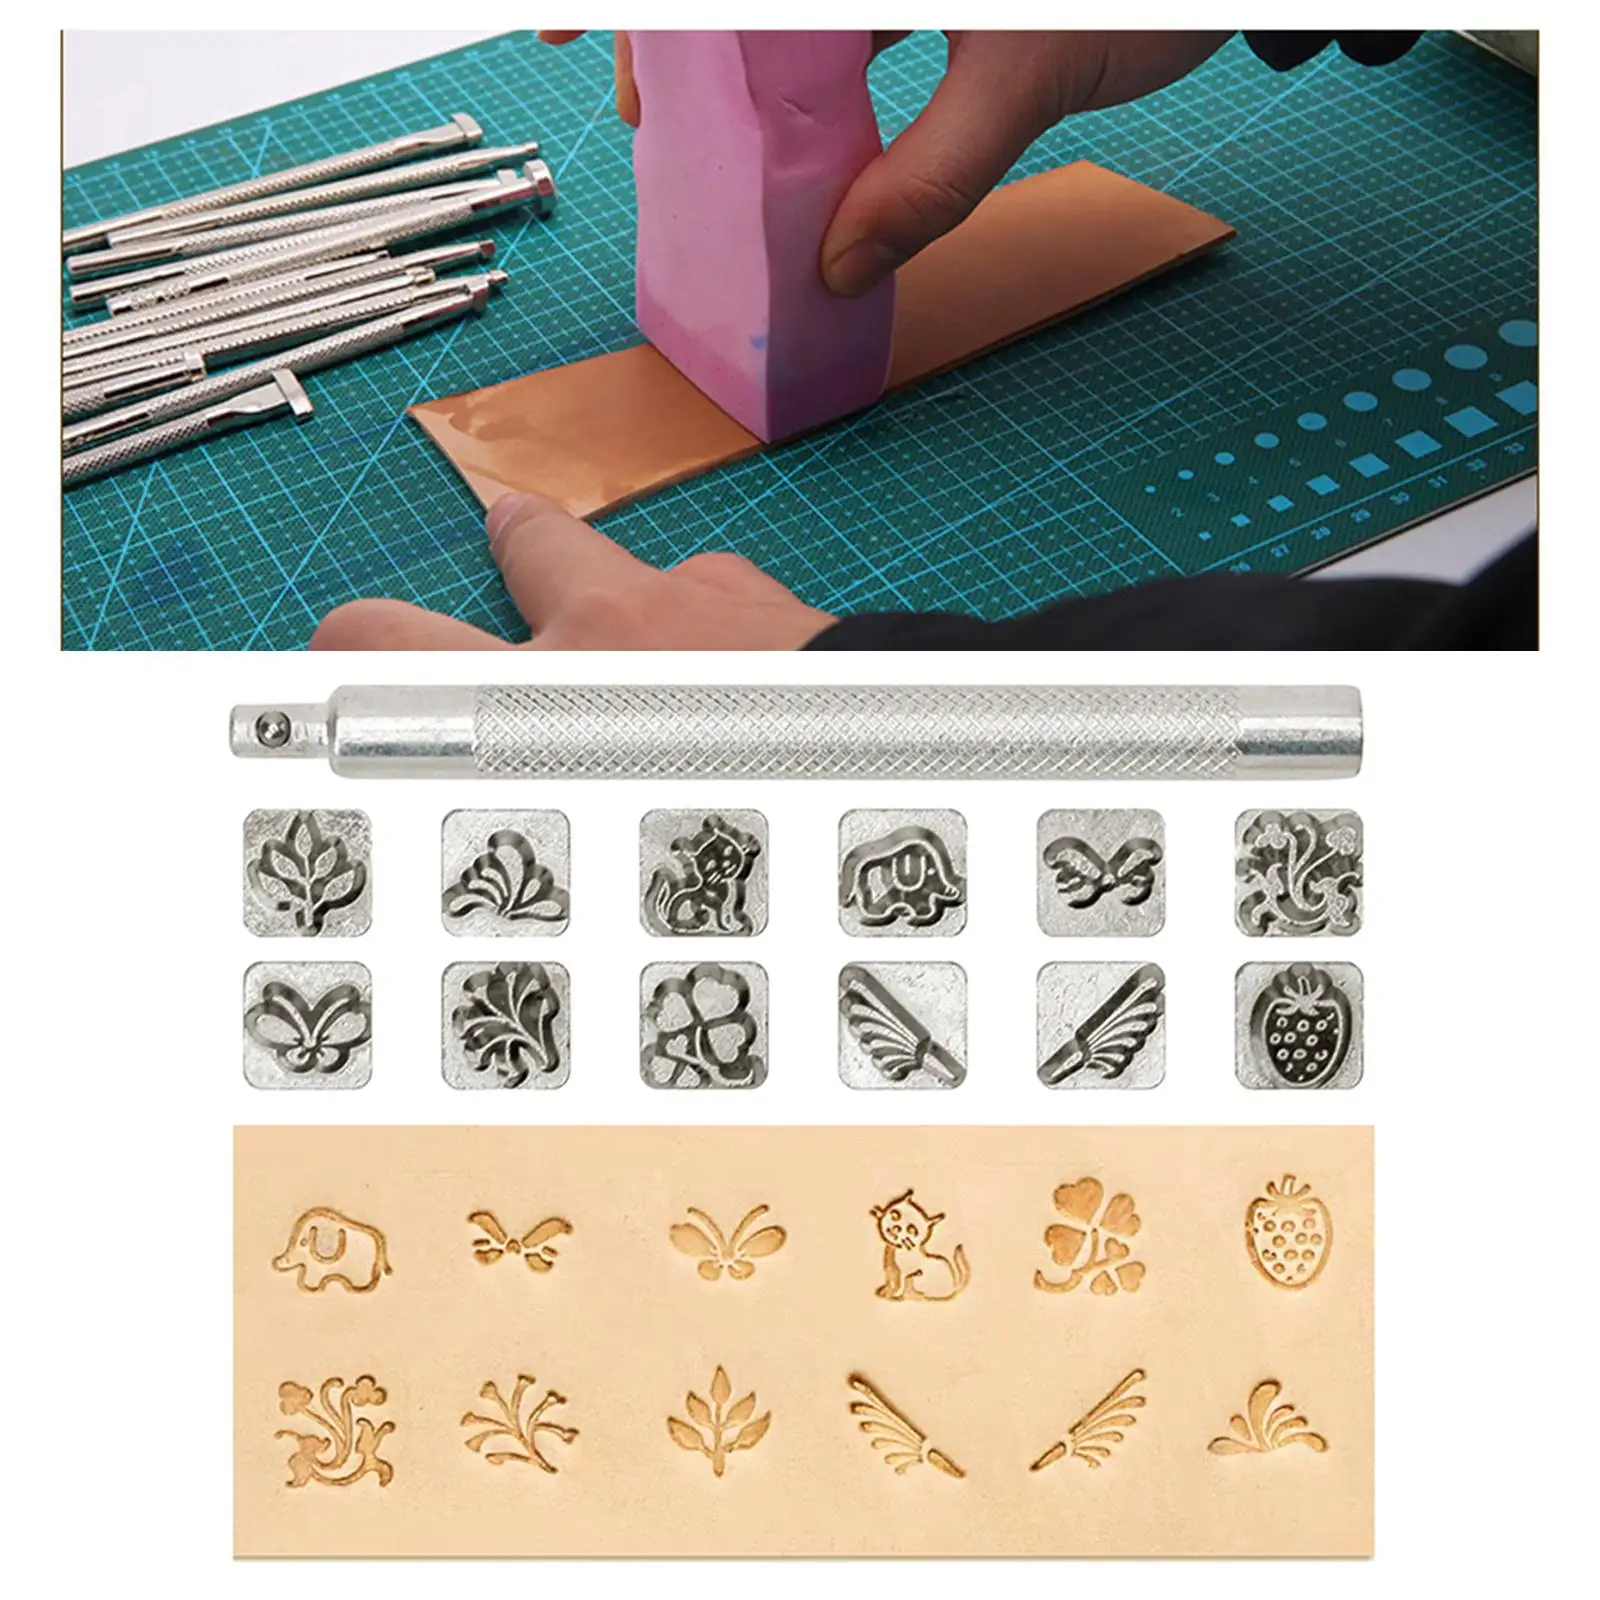 12PCS Leather Working Saddle Making Tools Set Carving Craft Stamps DIY Set